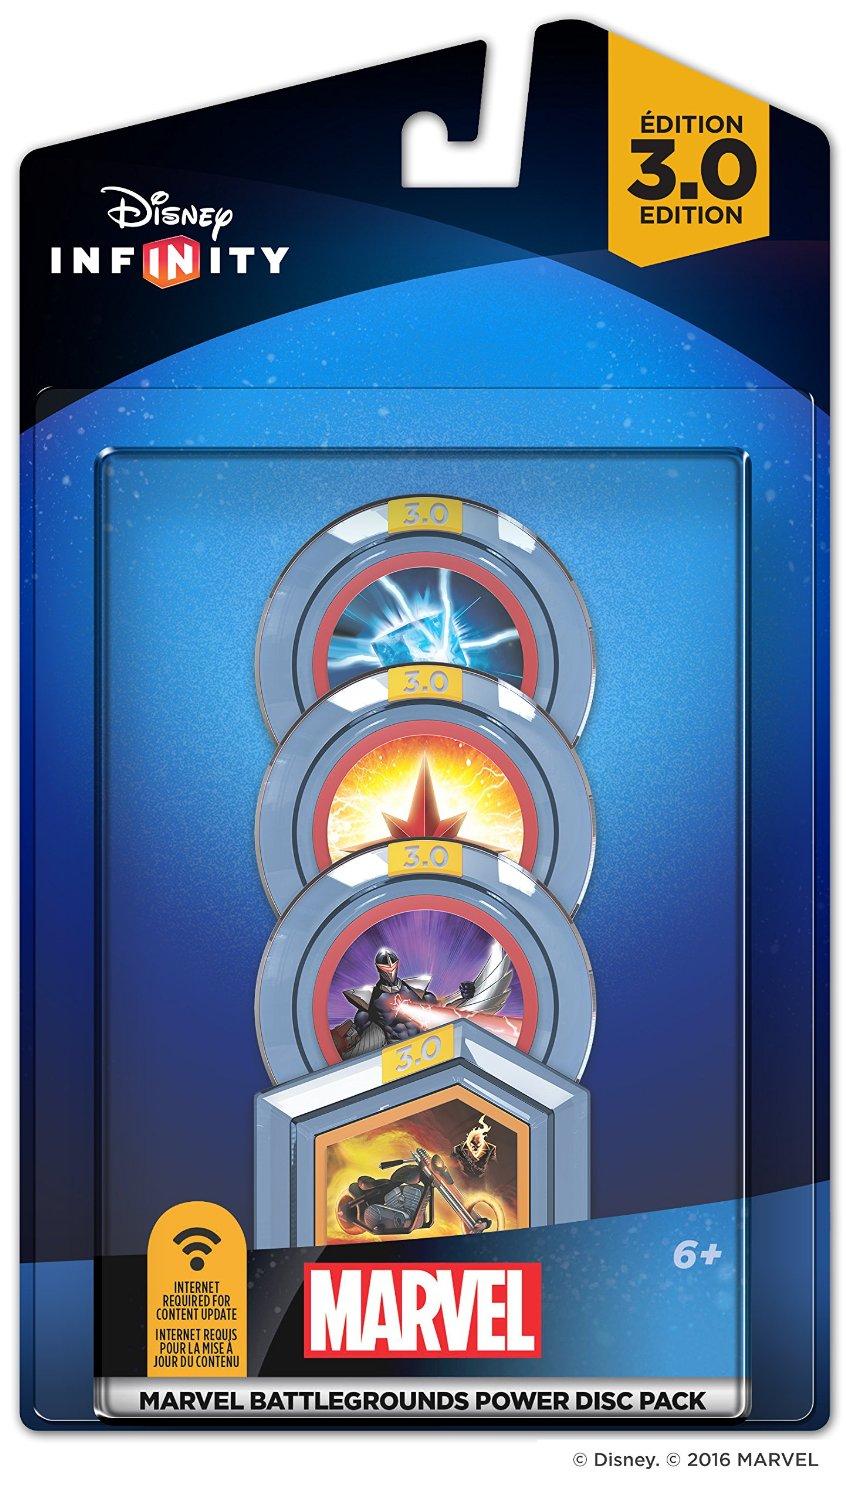 Disney Infinity 3.0 Edition: MARVEL Battlegrounds Power Disc Pack